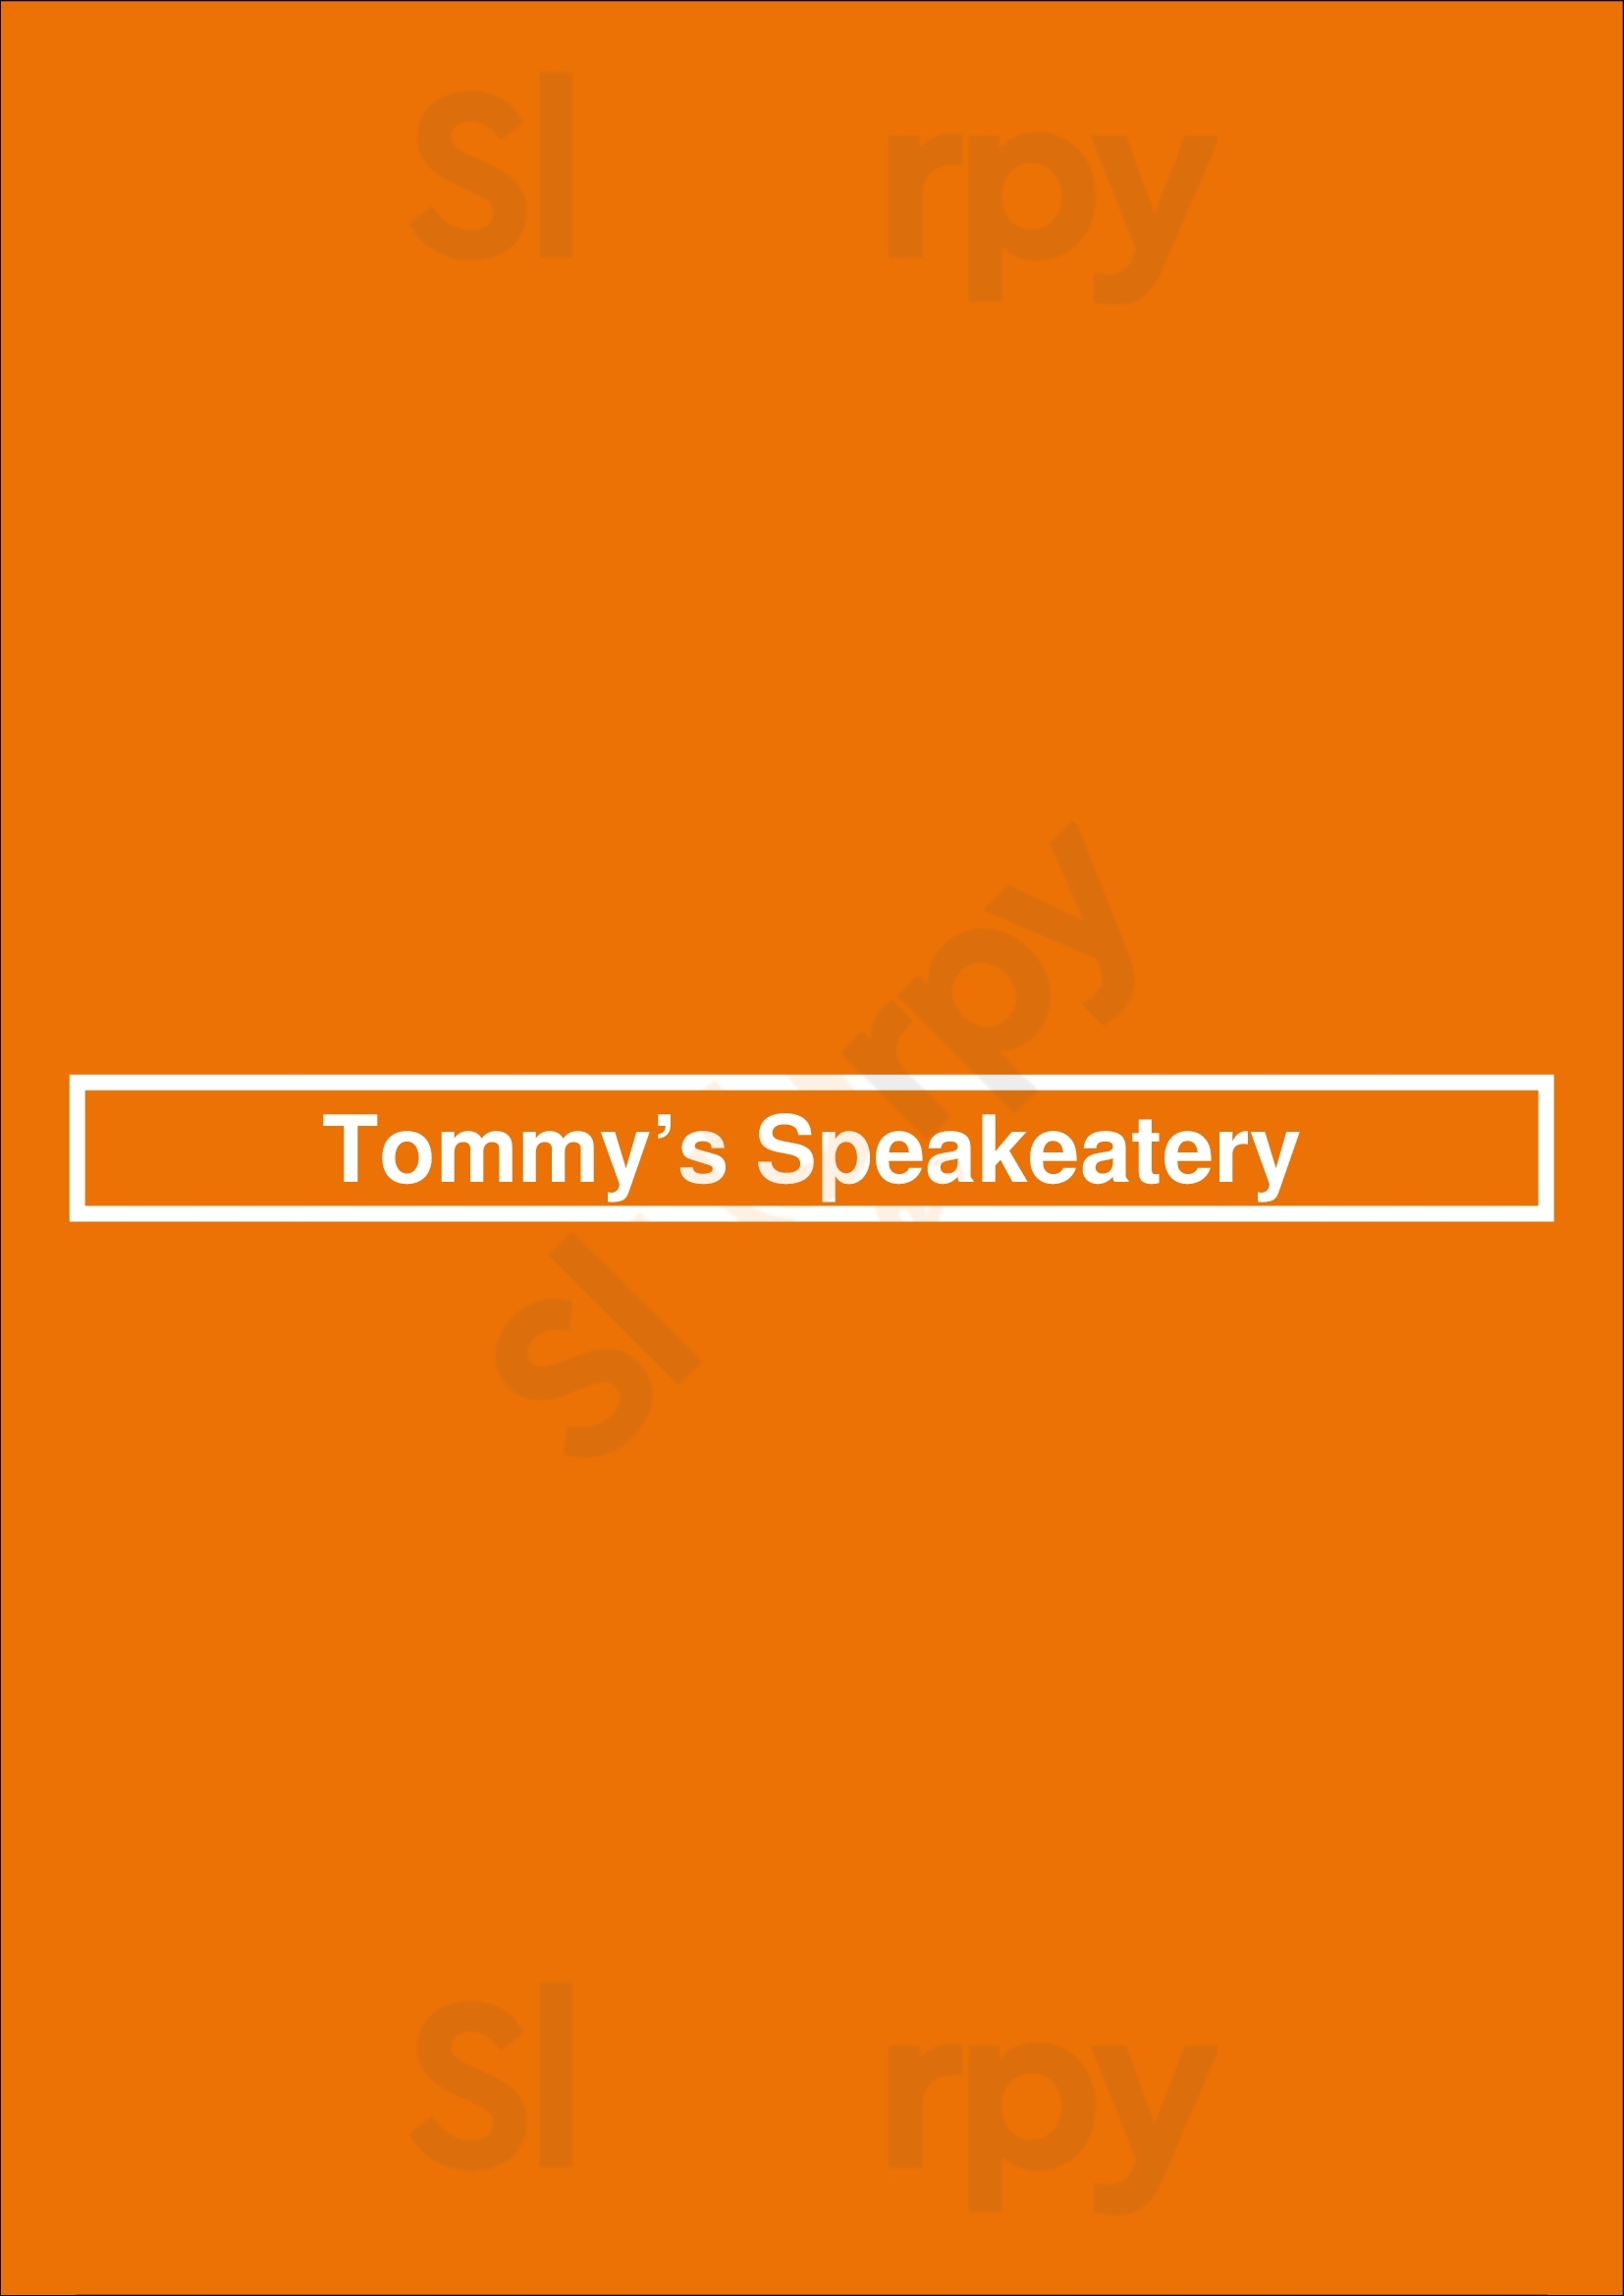 Tommy’s Speakeatery Regina Menu - 1